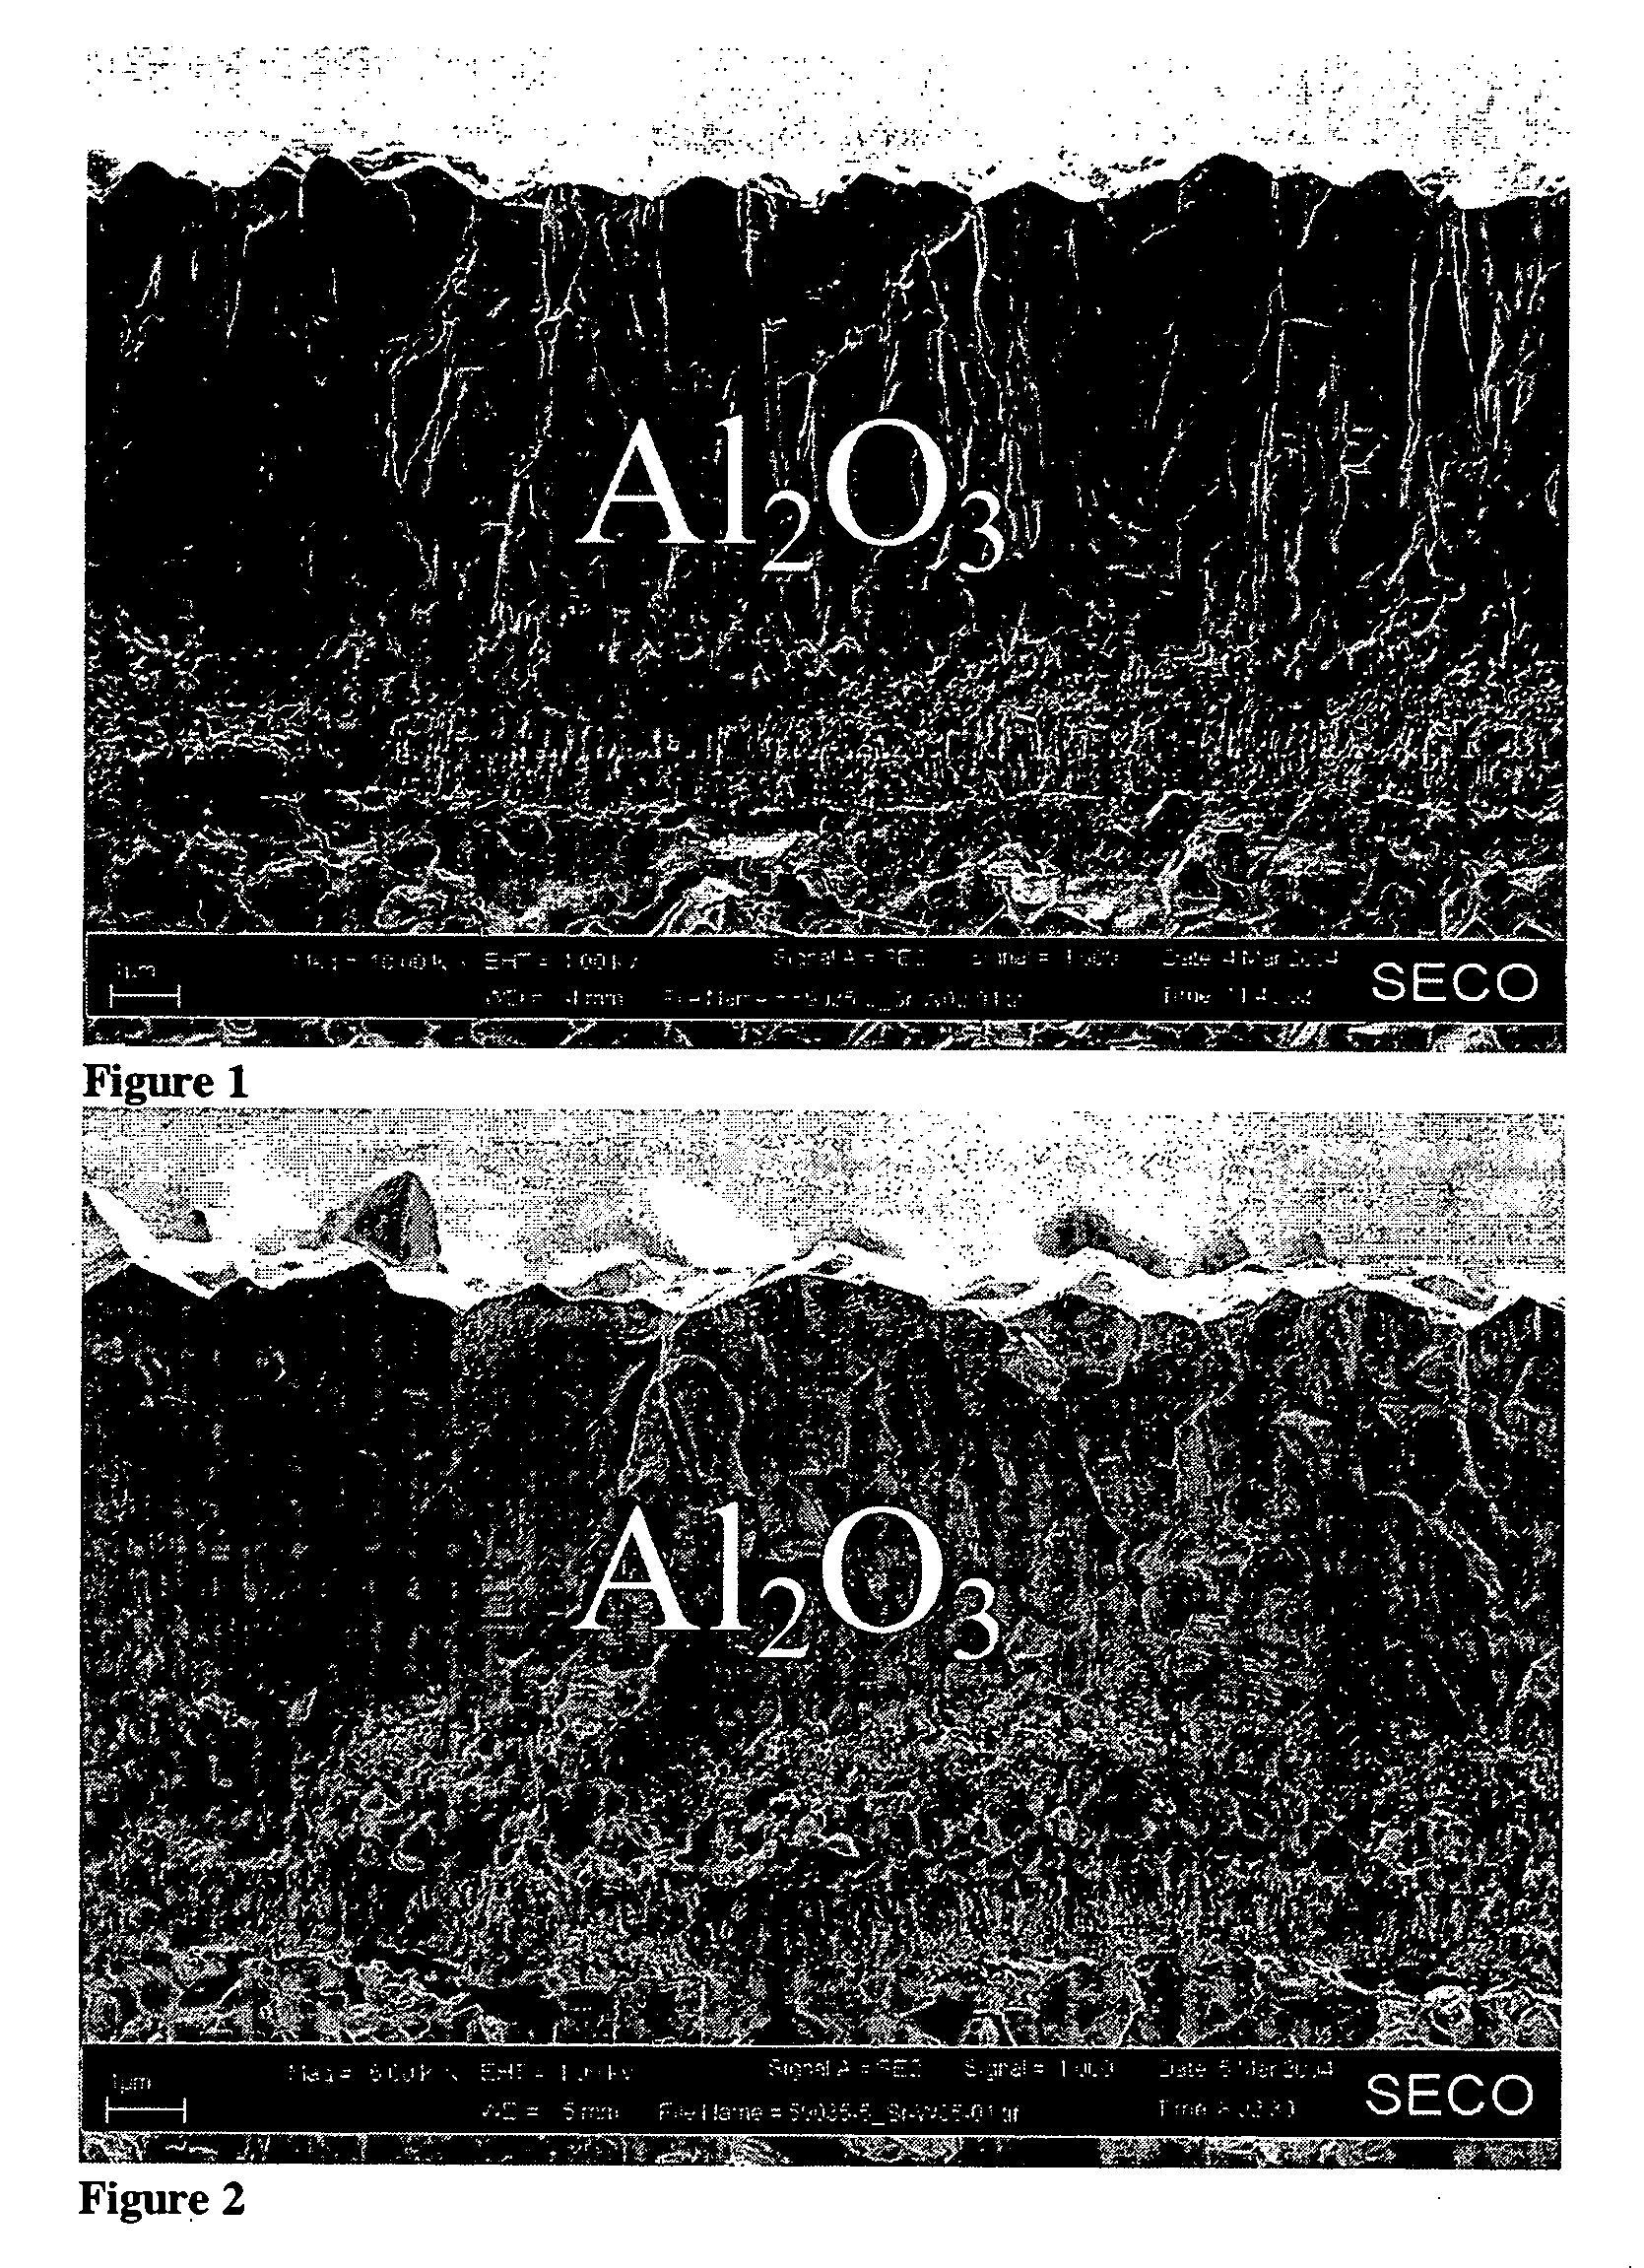 Alumina layer with enhanced texture